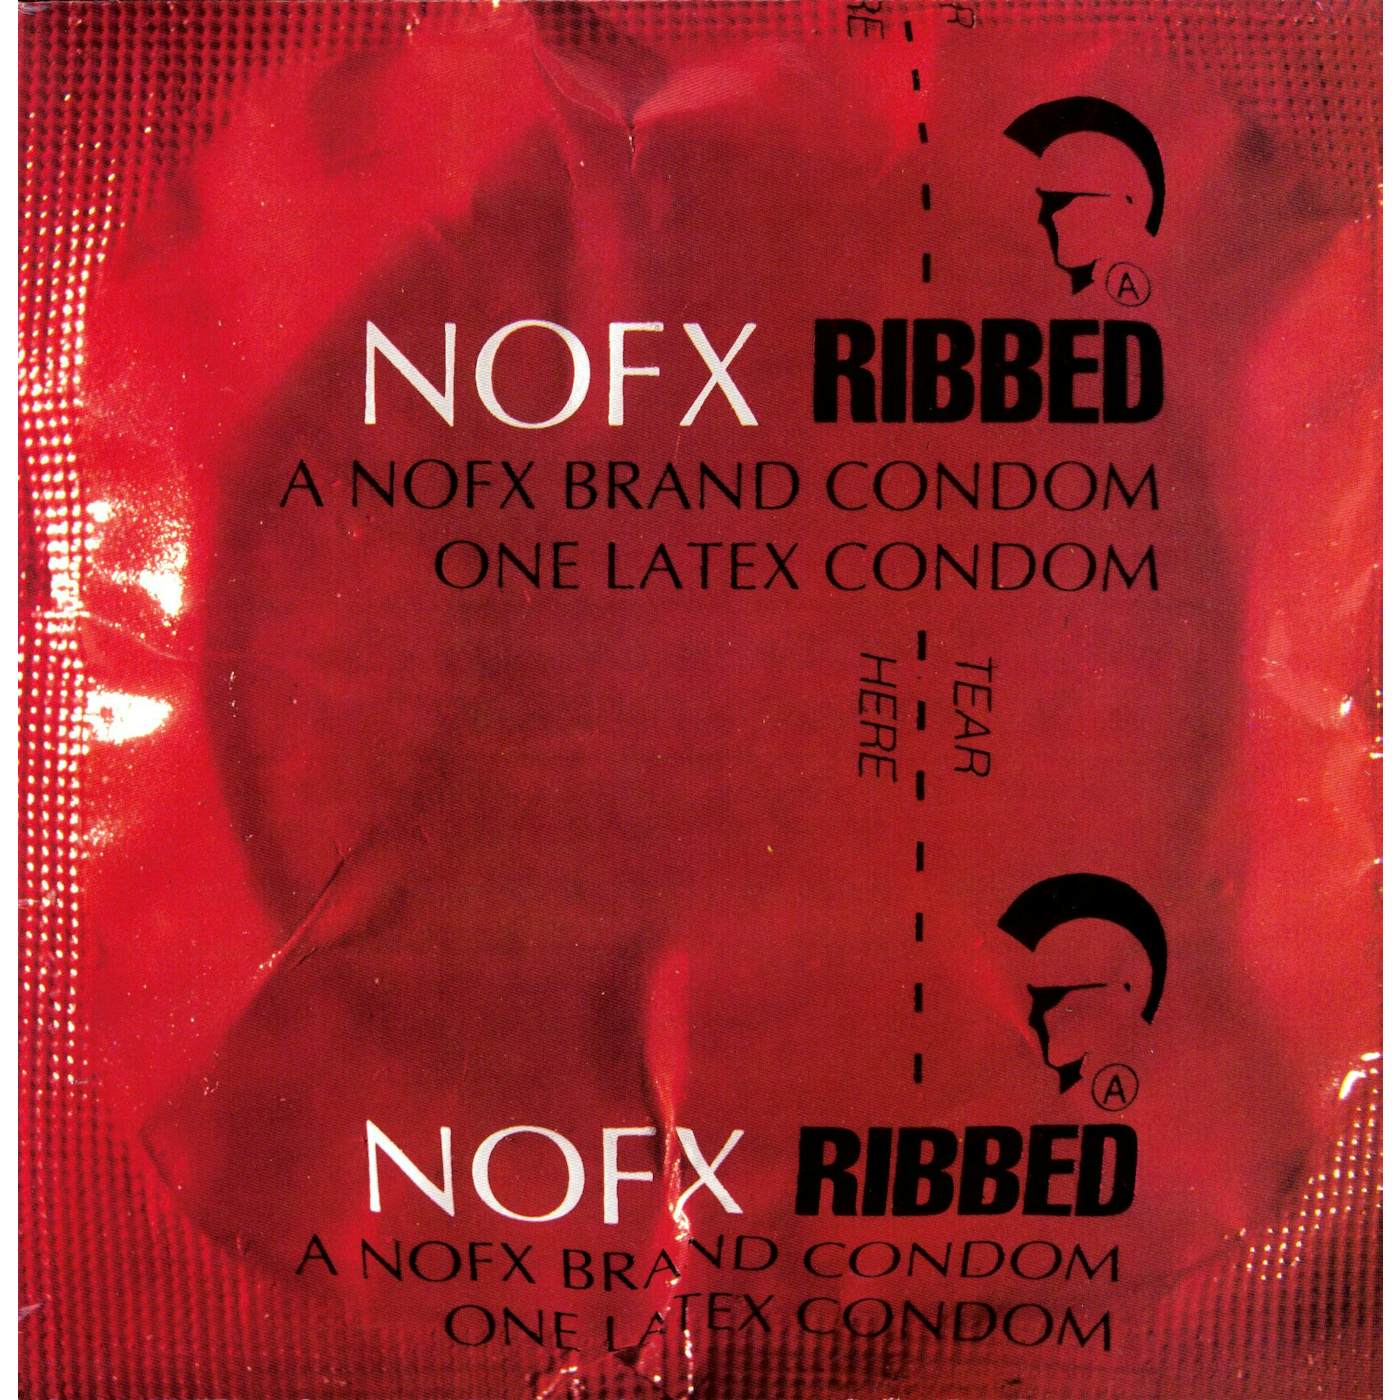 NOFX Ribbed Vinyl Record